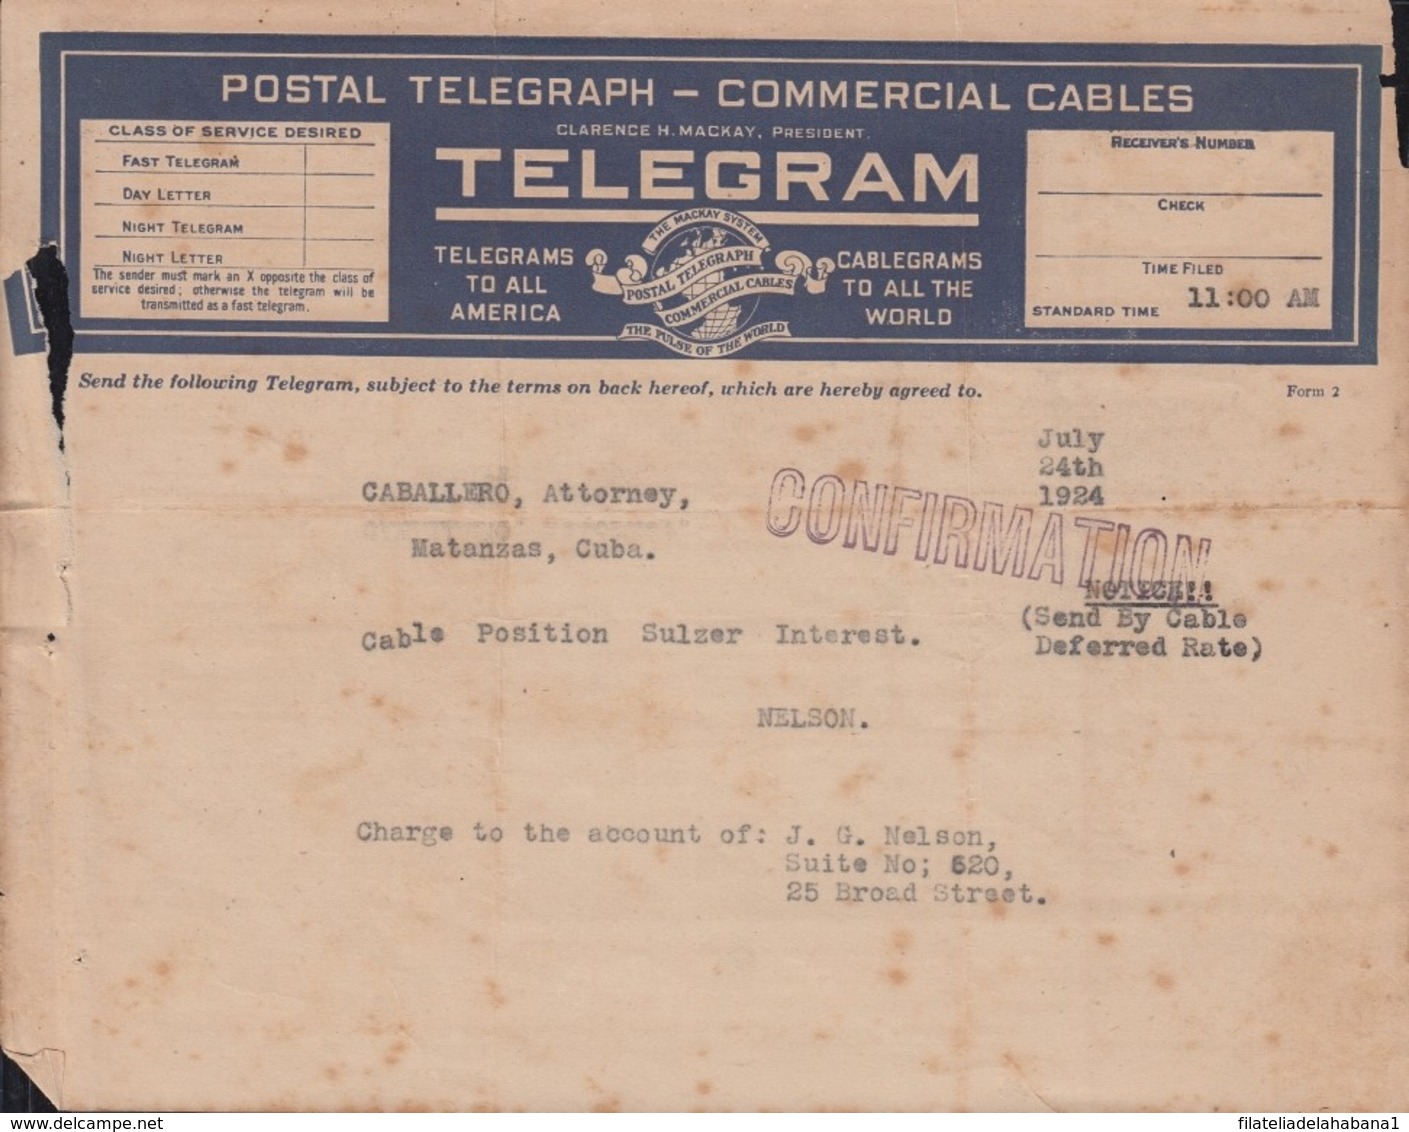 TELEG-274 CUBA (LG1507) REPUBLIC TELEGRAM TELEGRAPH 2 MODELOS DE TELEGRAMA - Telegrafo